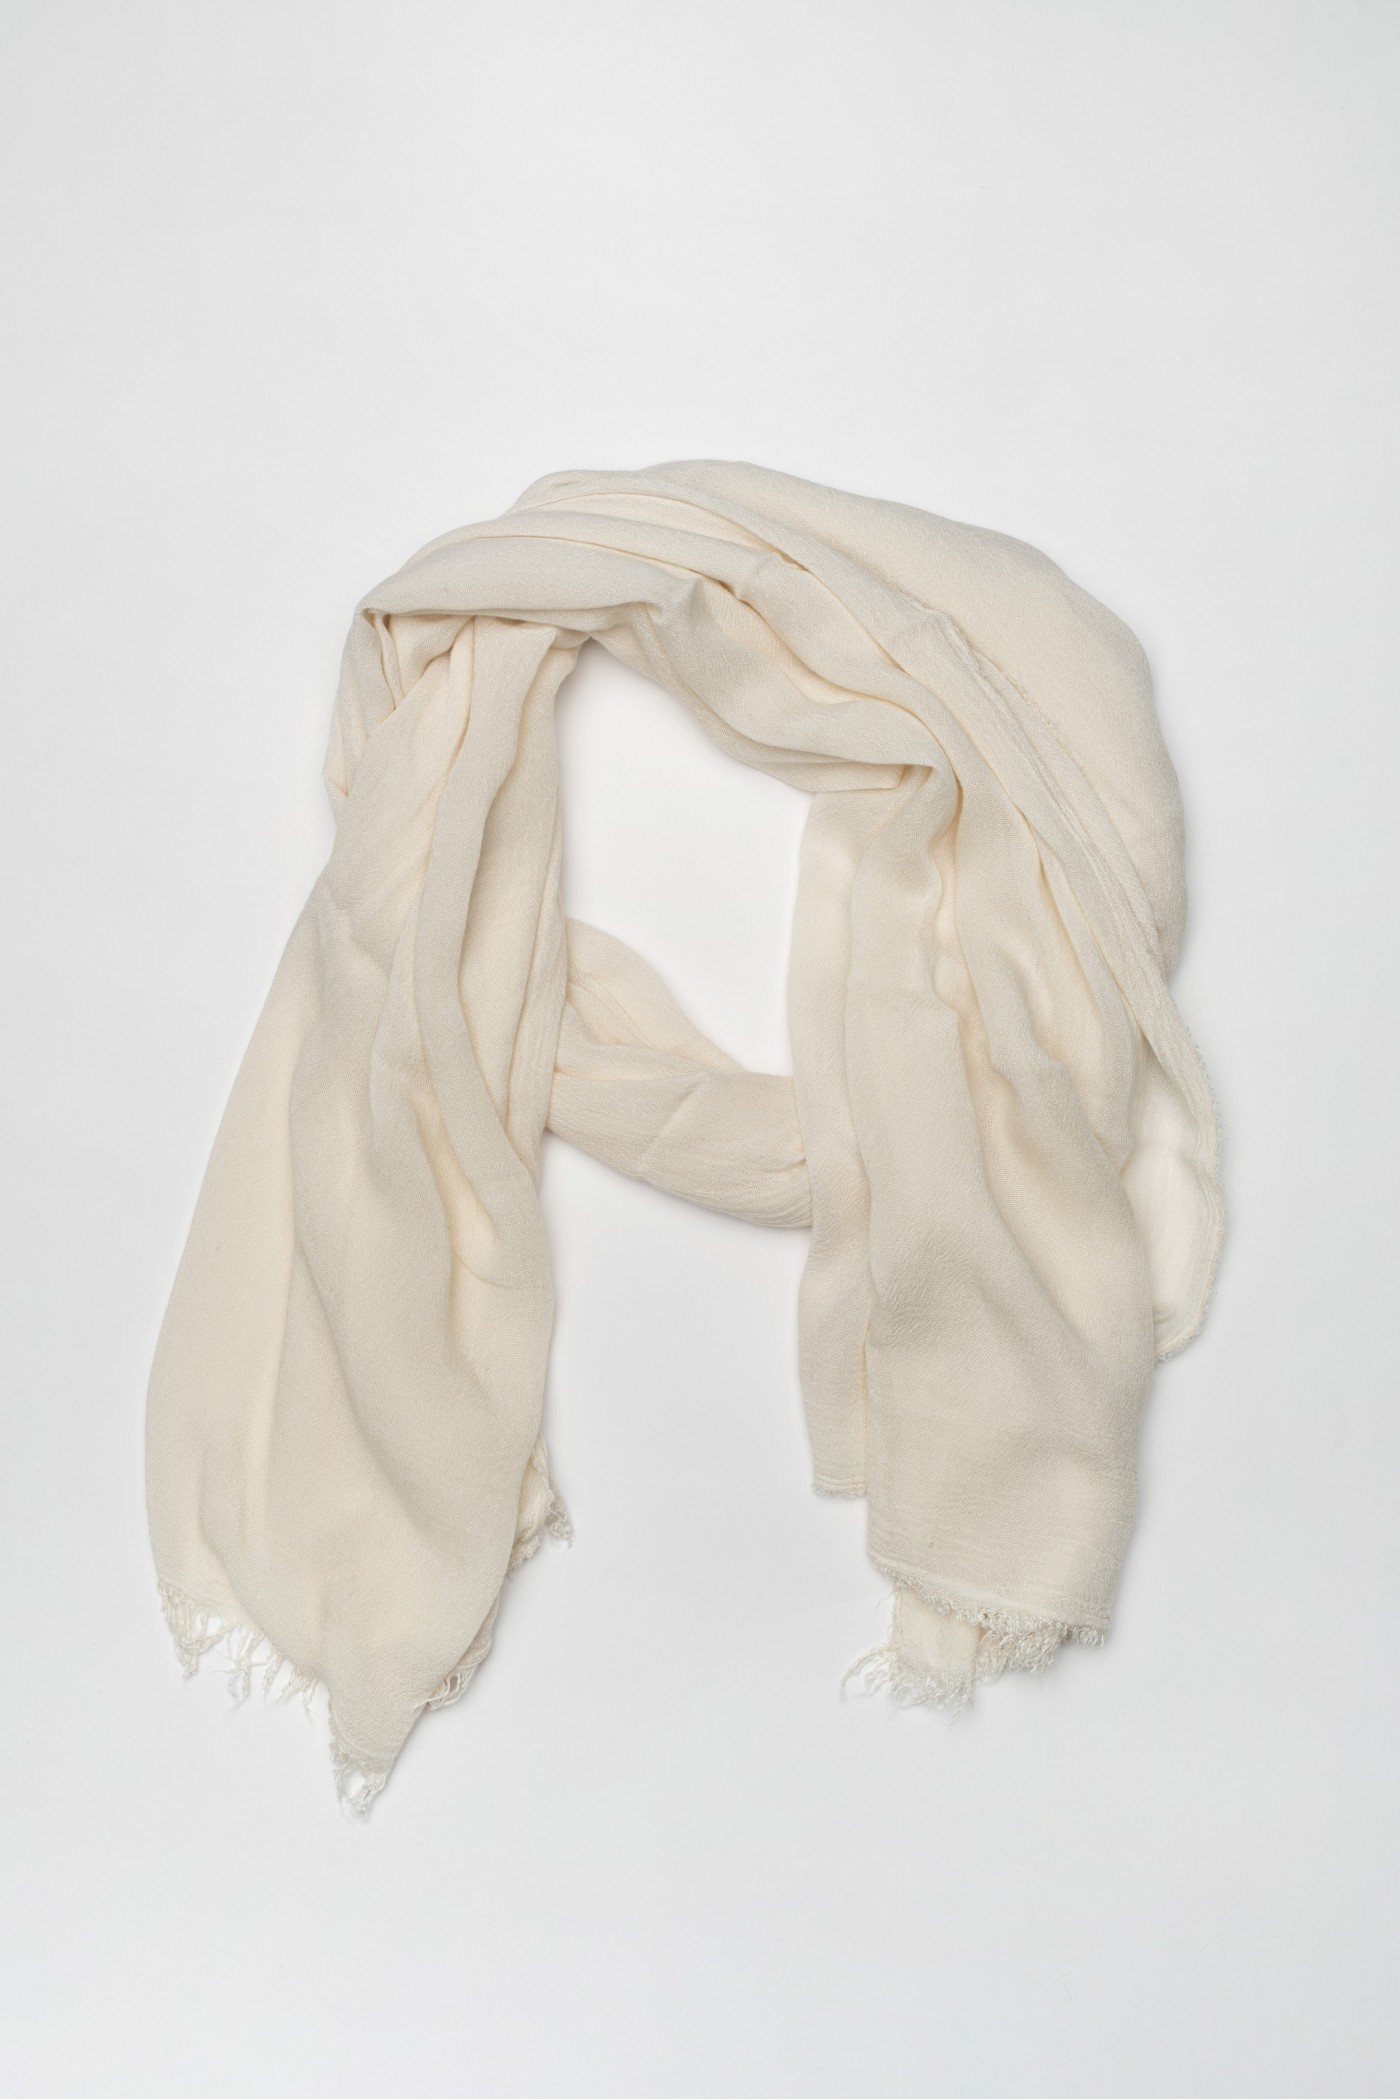 Monochrome scarf, unisex